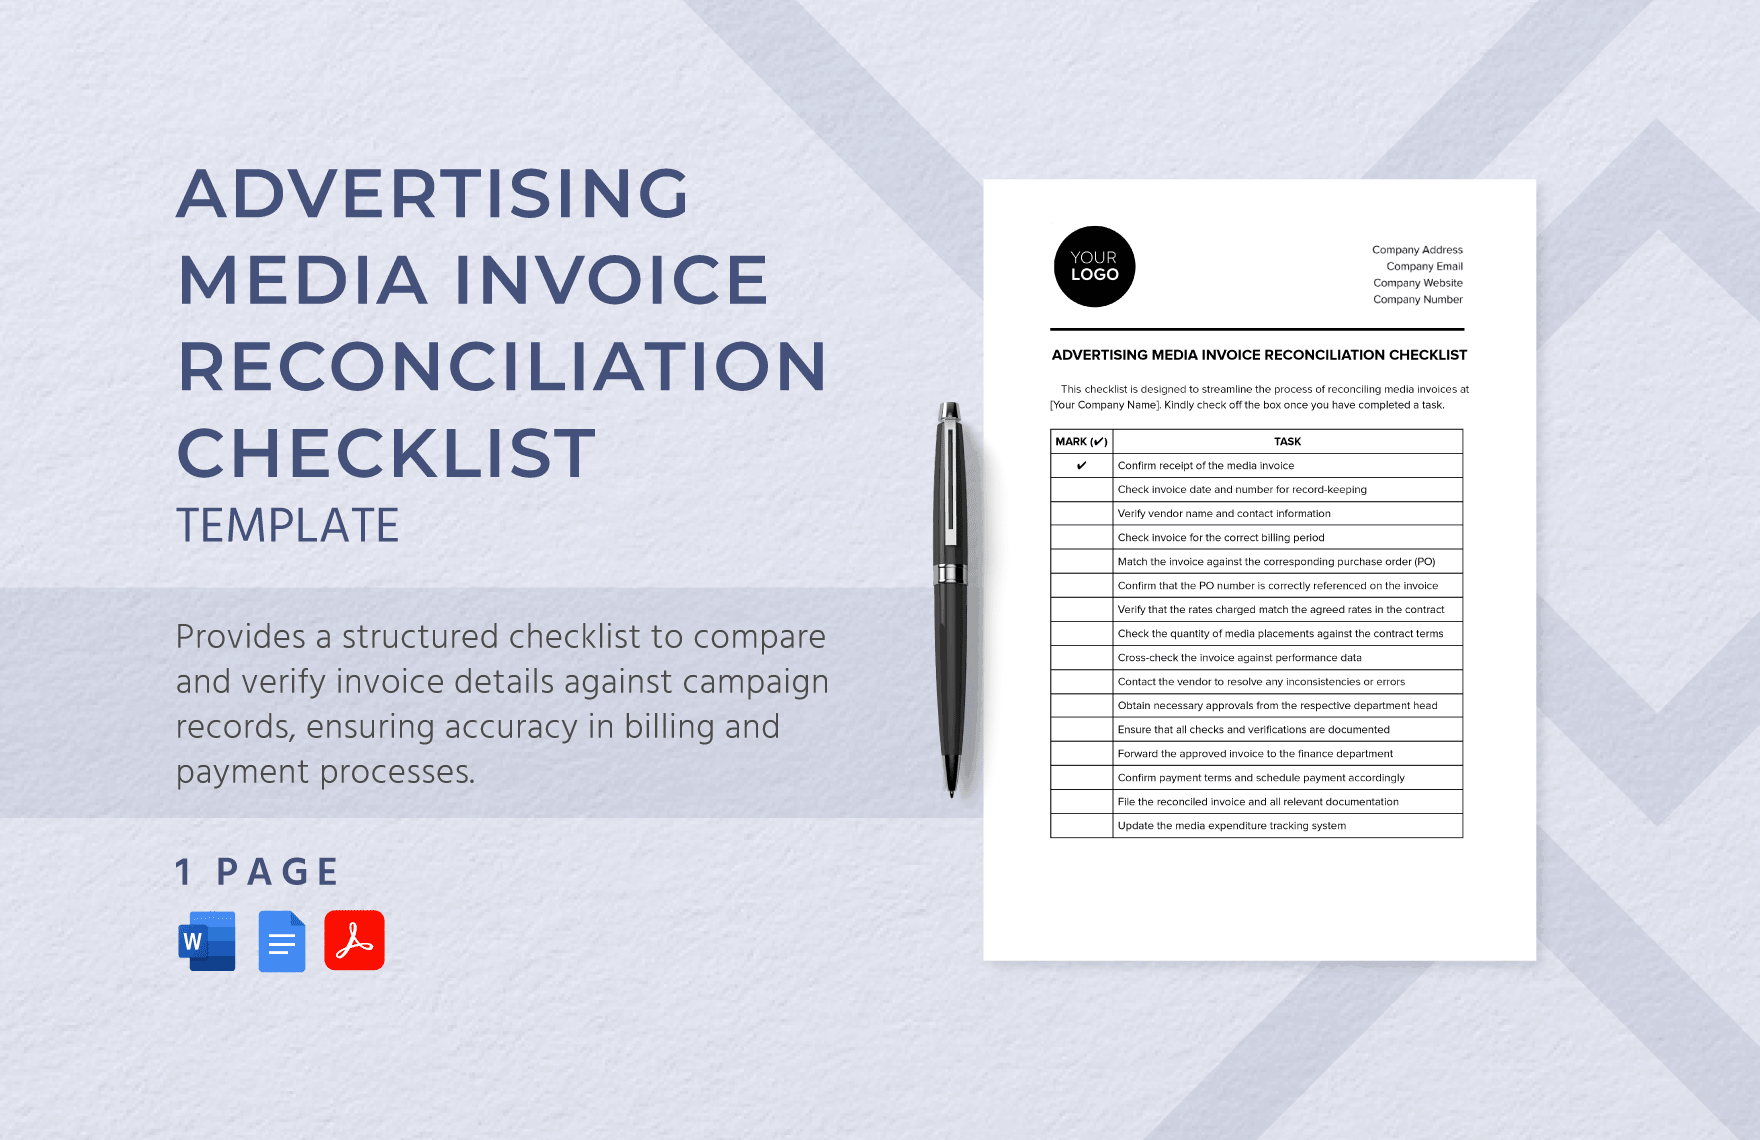 Advertising Media Invoice Reconciliation Checklist Template in Word, Google Docs, PDF